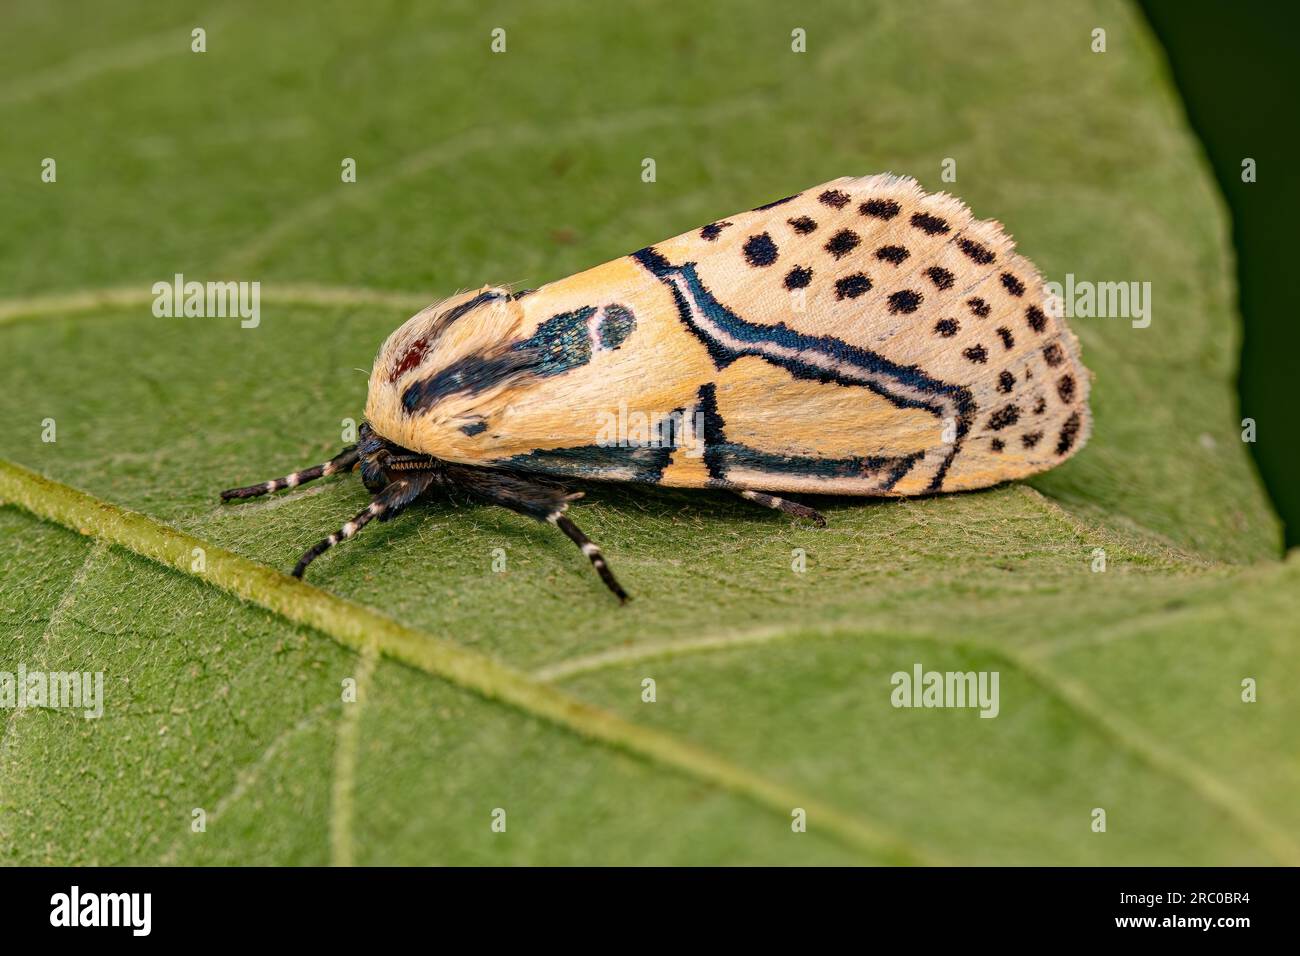 Adult Hieroglyphic Moth of the species Diphthera festiva Stock Photo